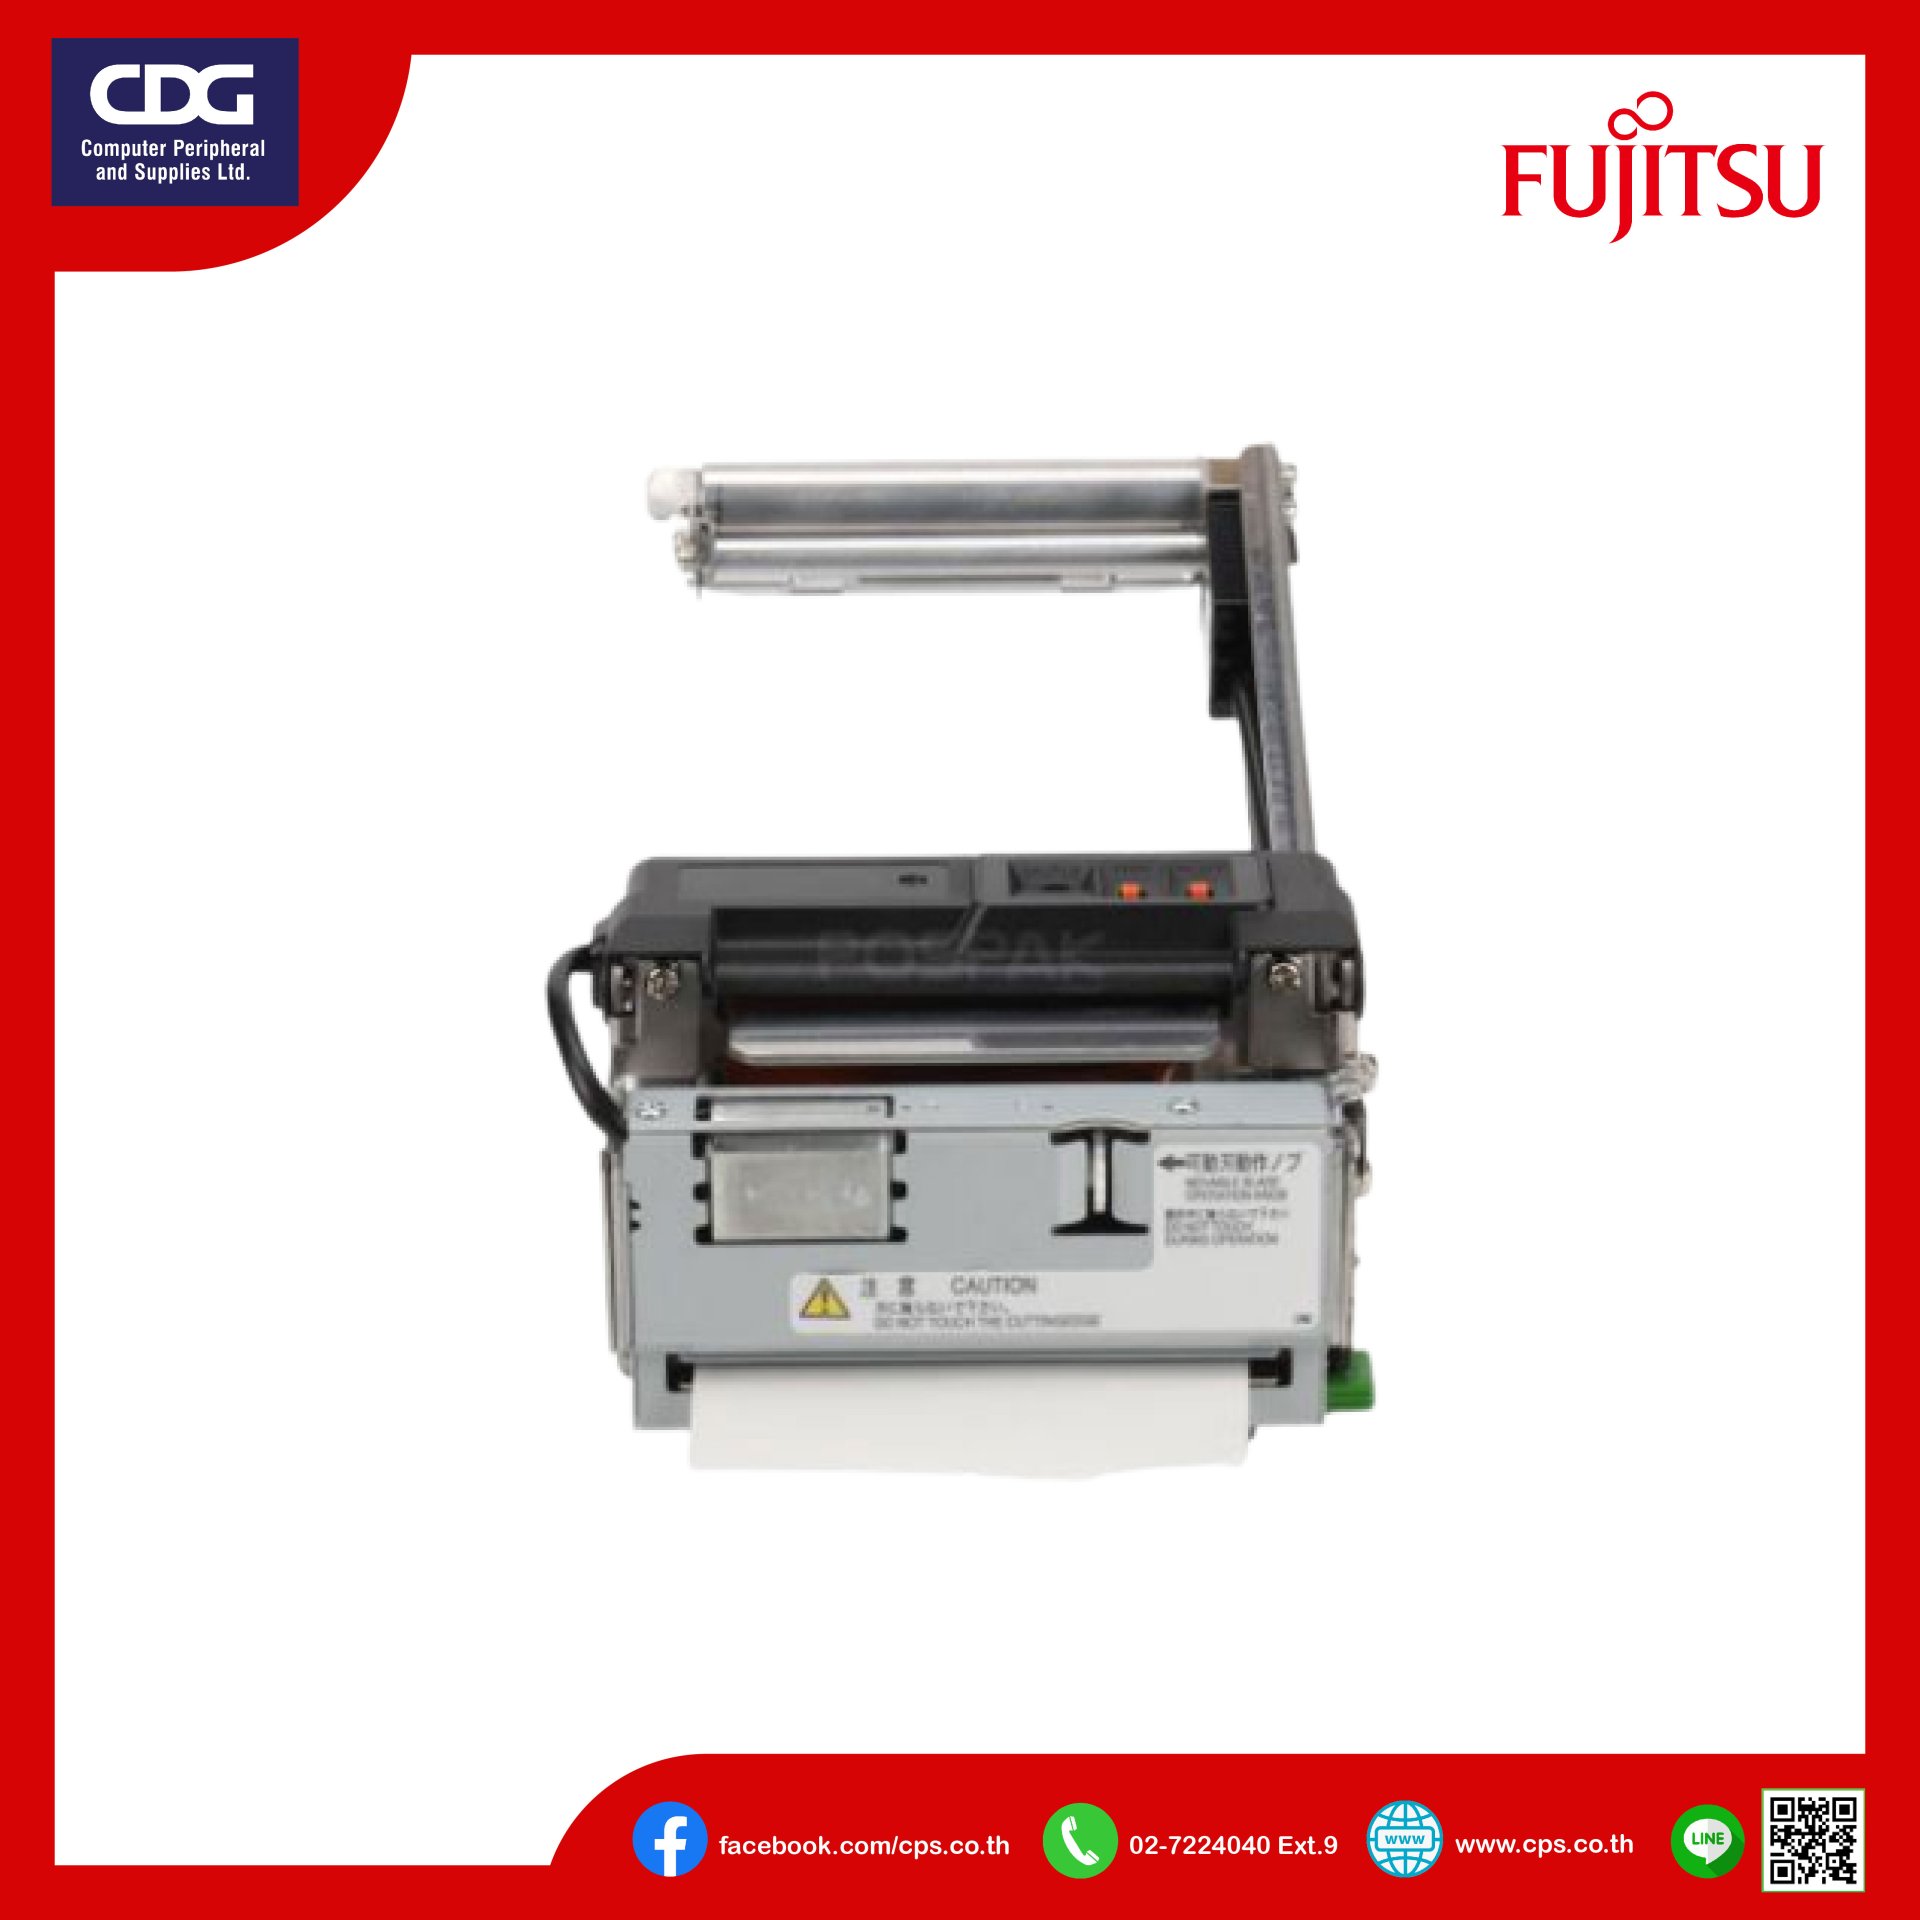 Thermal printers: Fujitsu Components Asia : Fujitsu Singapore